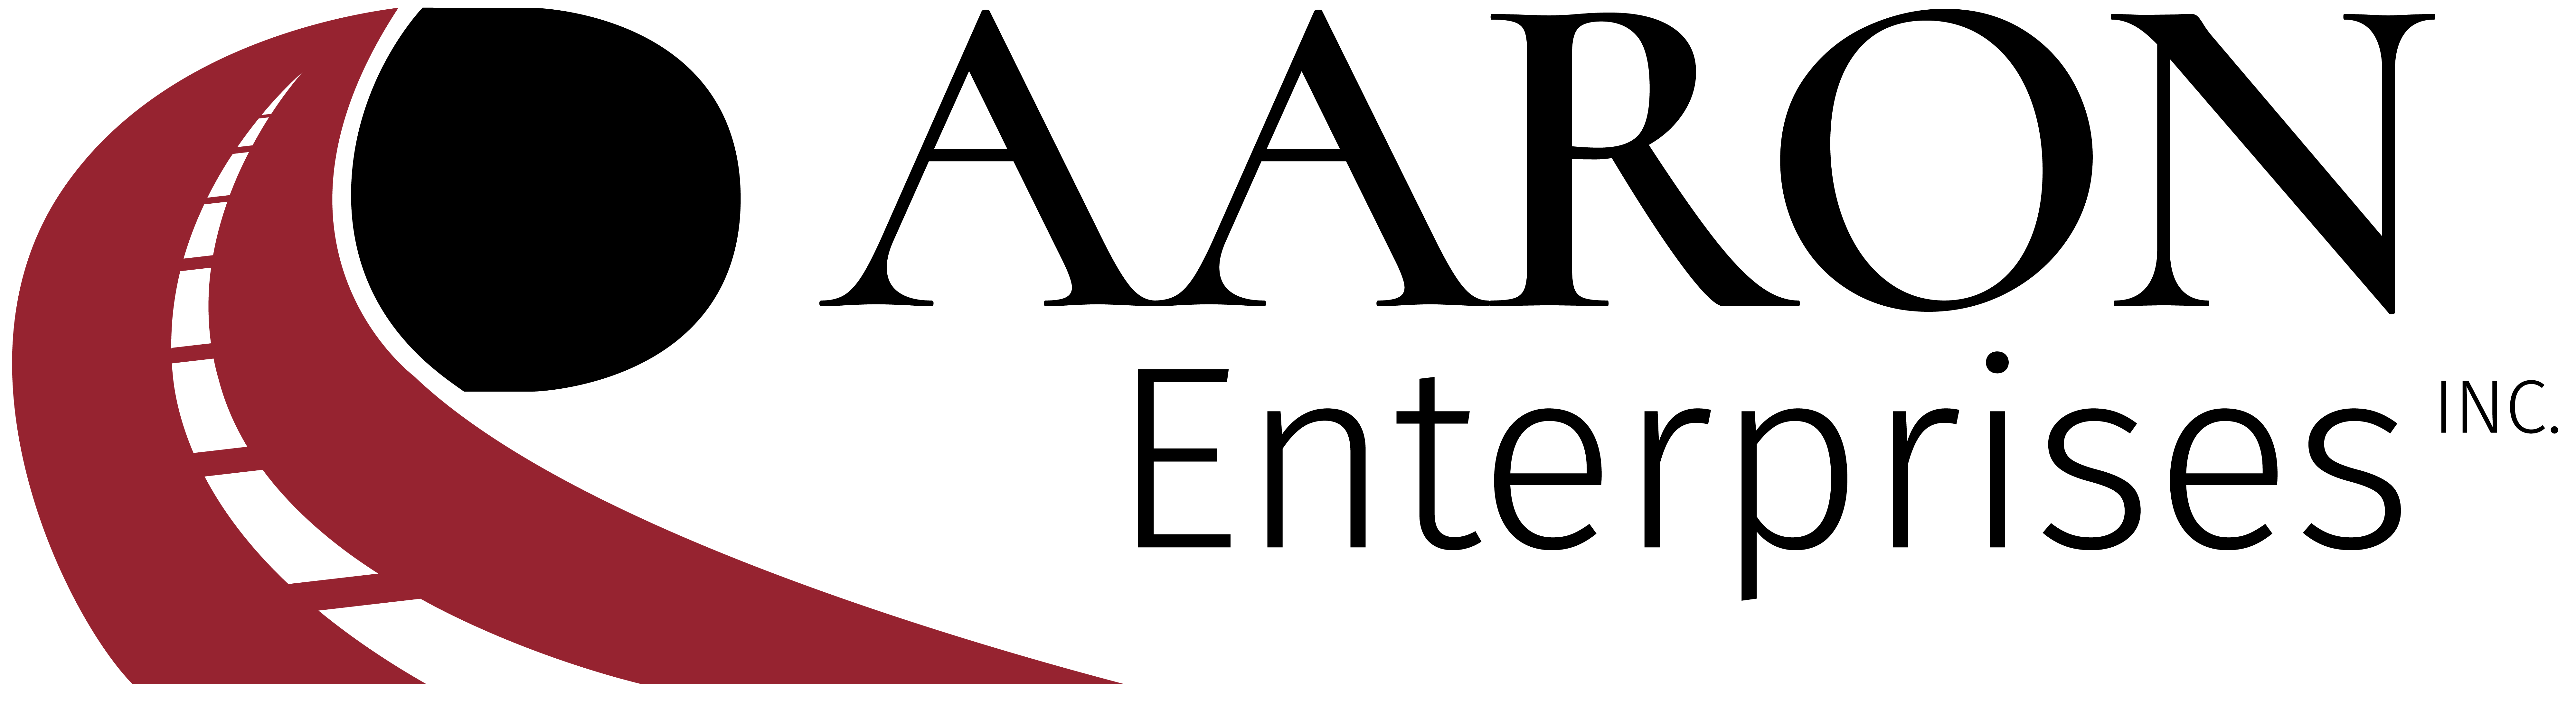 Aaron Enterprises, Inc.